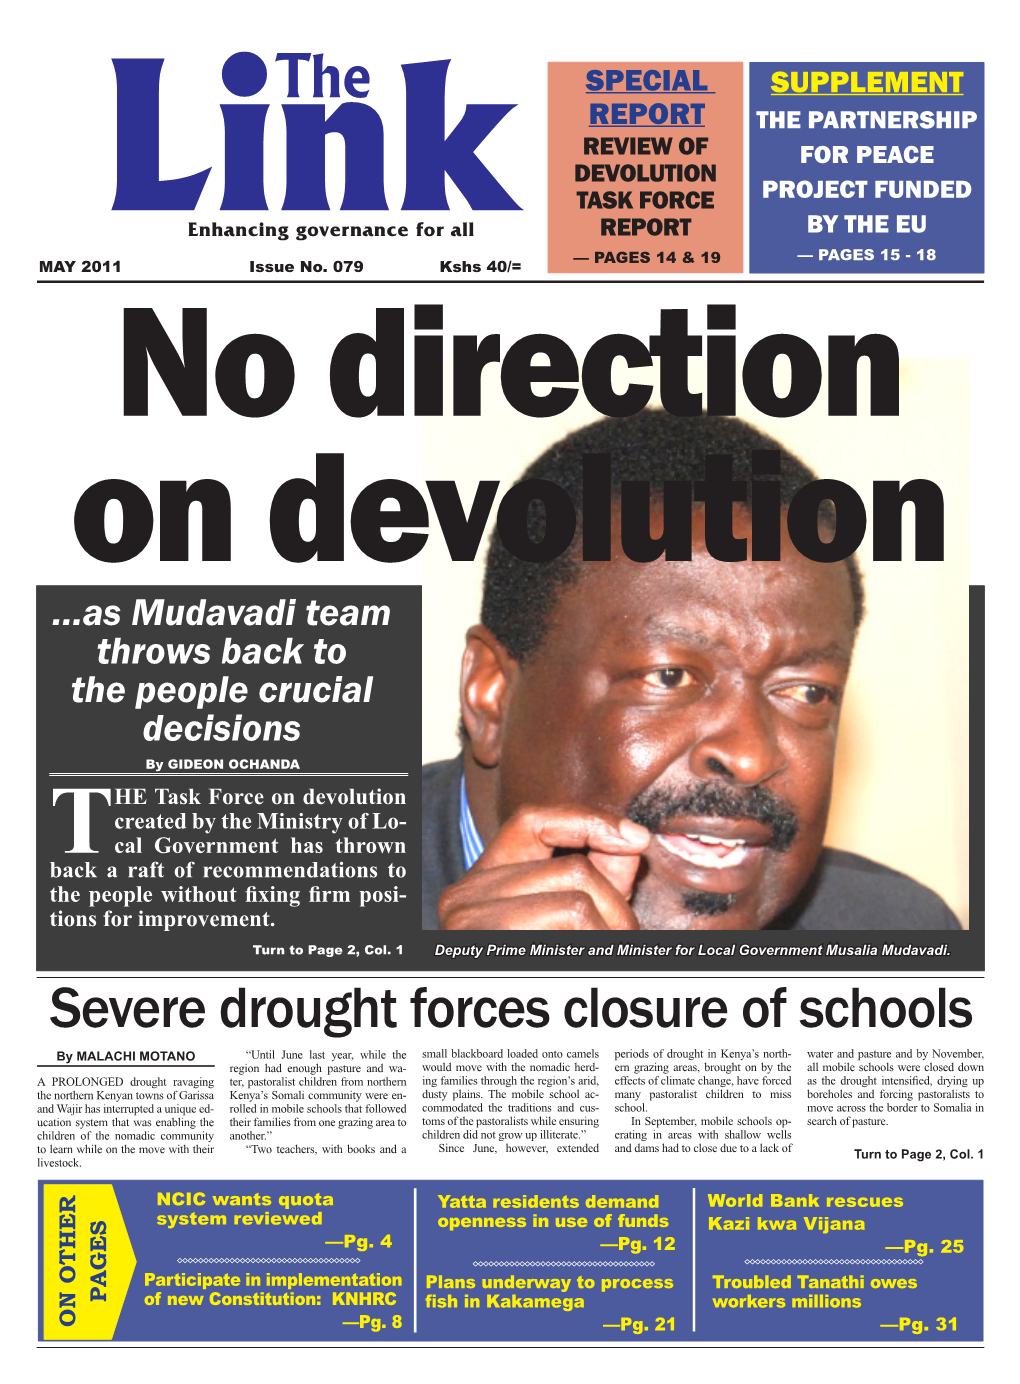 Severe Drought Forces Closure of Schools